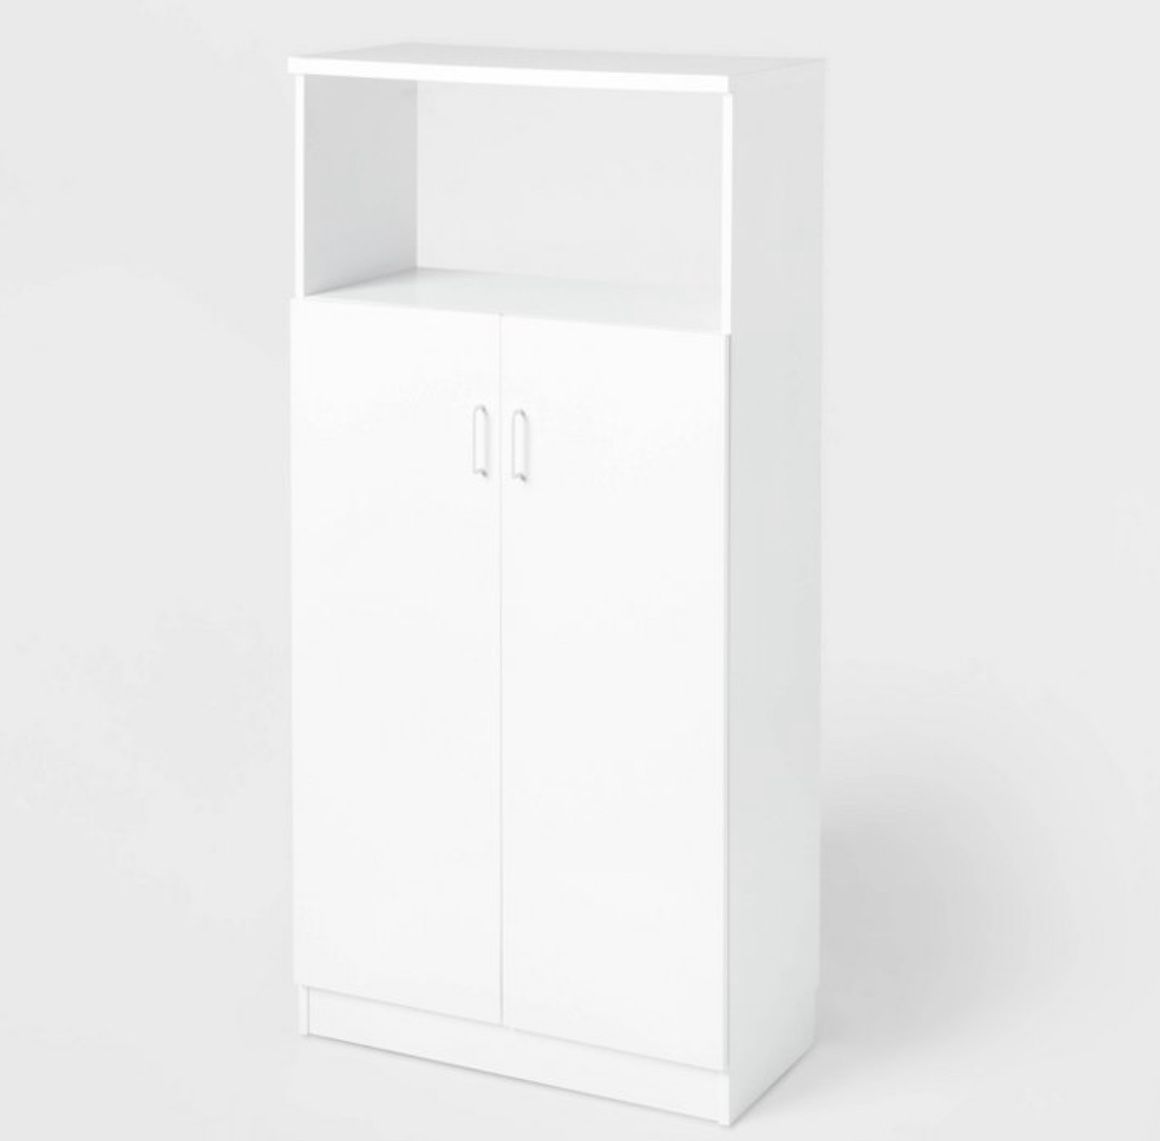 Large Storage Cabinet White - Brightroom™: 2-Door Design, Laminated Finish, Anti-Tip Hardware